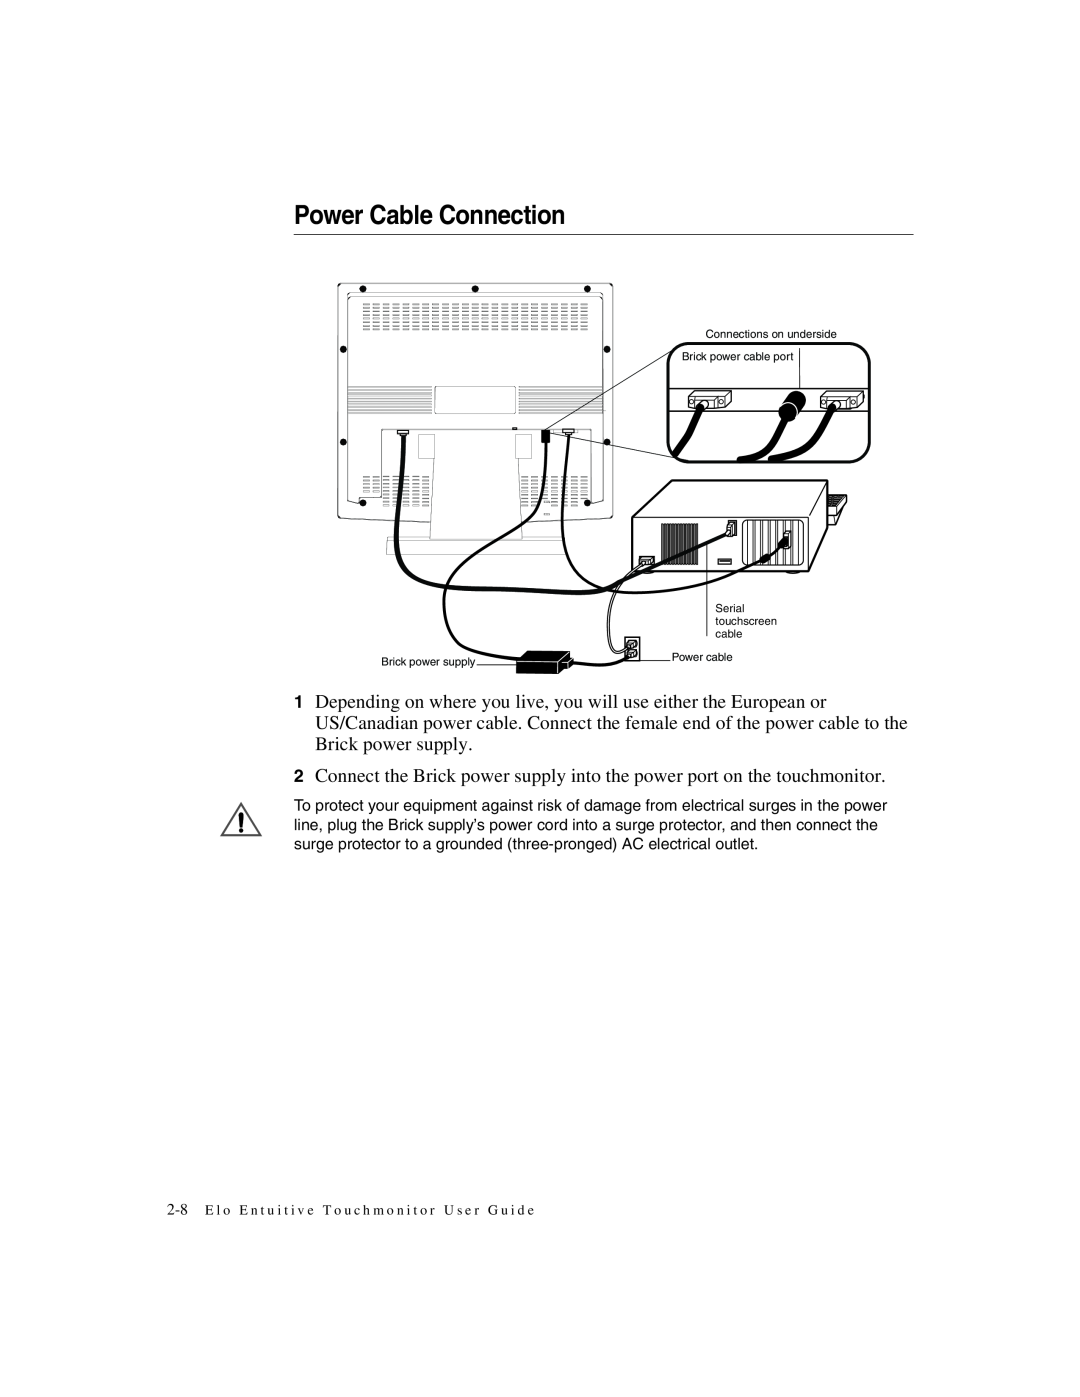 Elo TouchSystems 1725L Series Power Cable Connection, E l o E n t u i t i v e T o u c h m o n i t o r U s e r G u i d e 